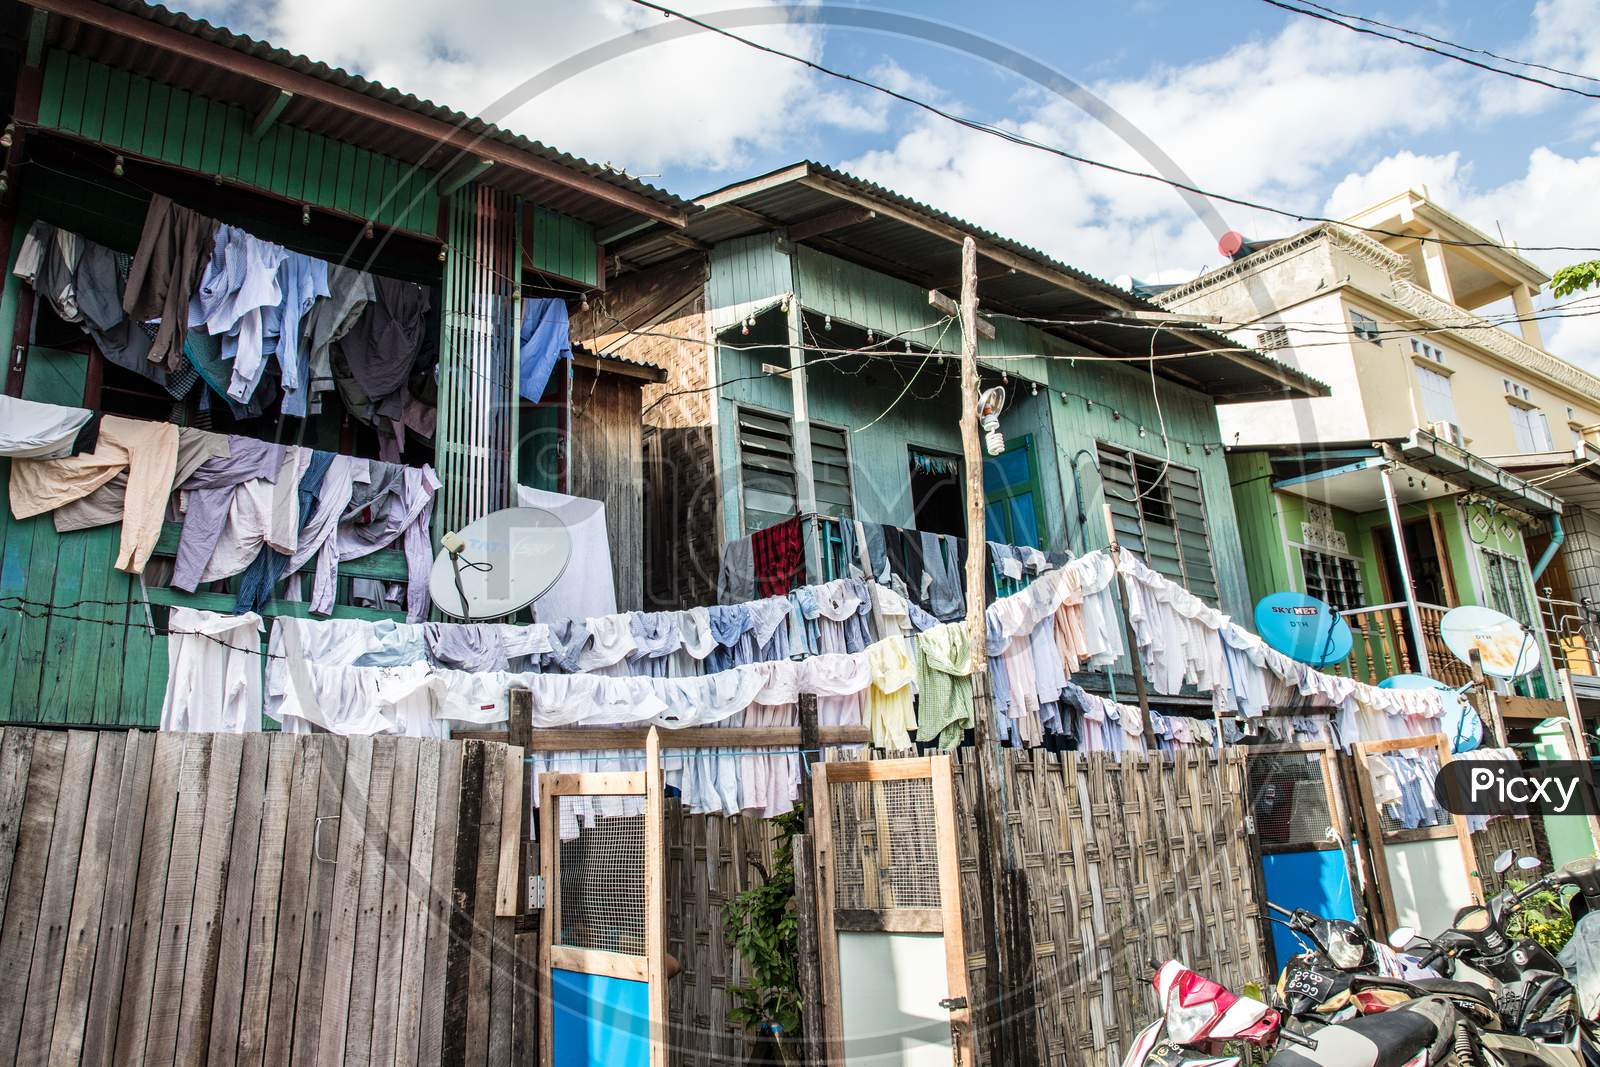 Laundry Area in Myanmar